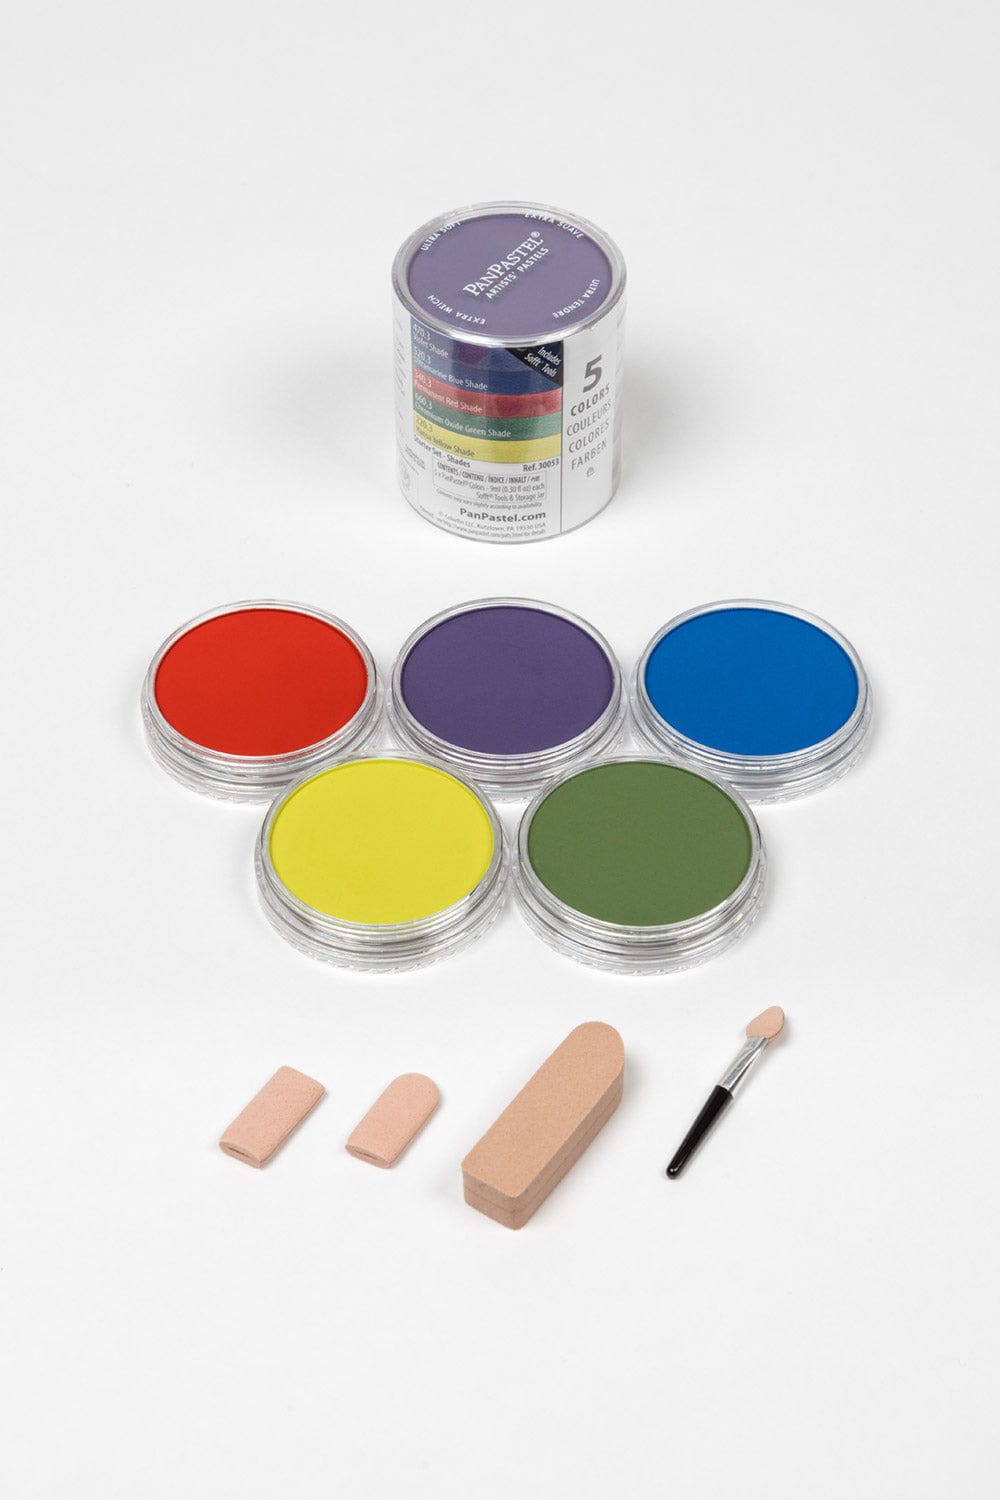 PanPastel : Skyscapes With Les Darlow : Set of 10 Colours : Plus Tools -  Pastel Sets - Art Sets - Color